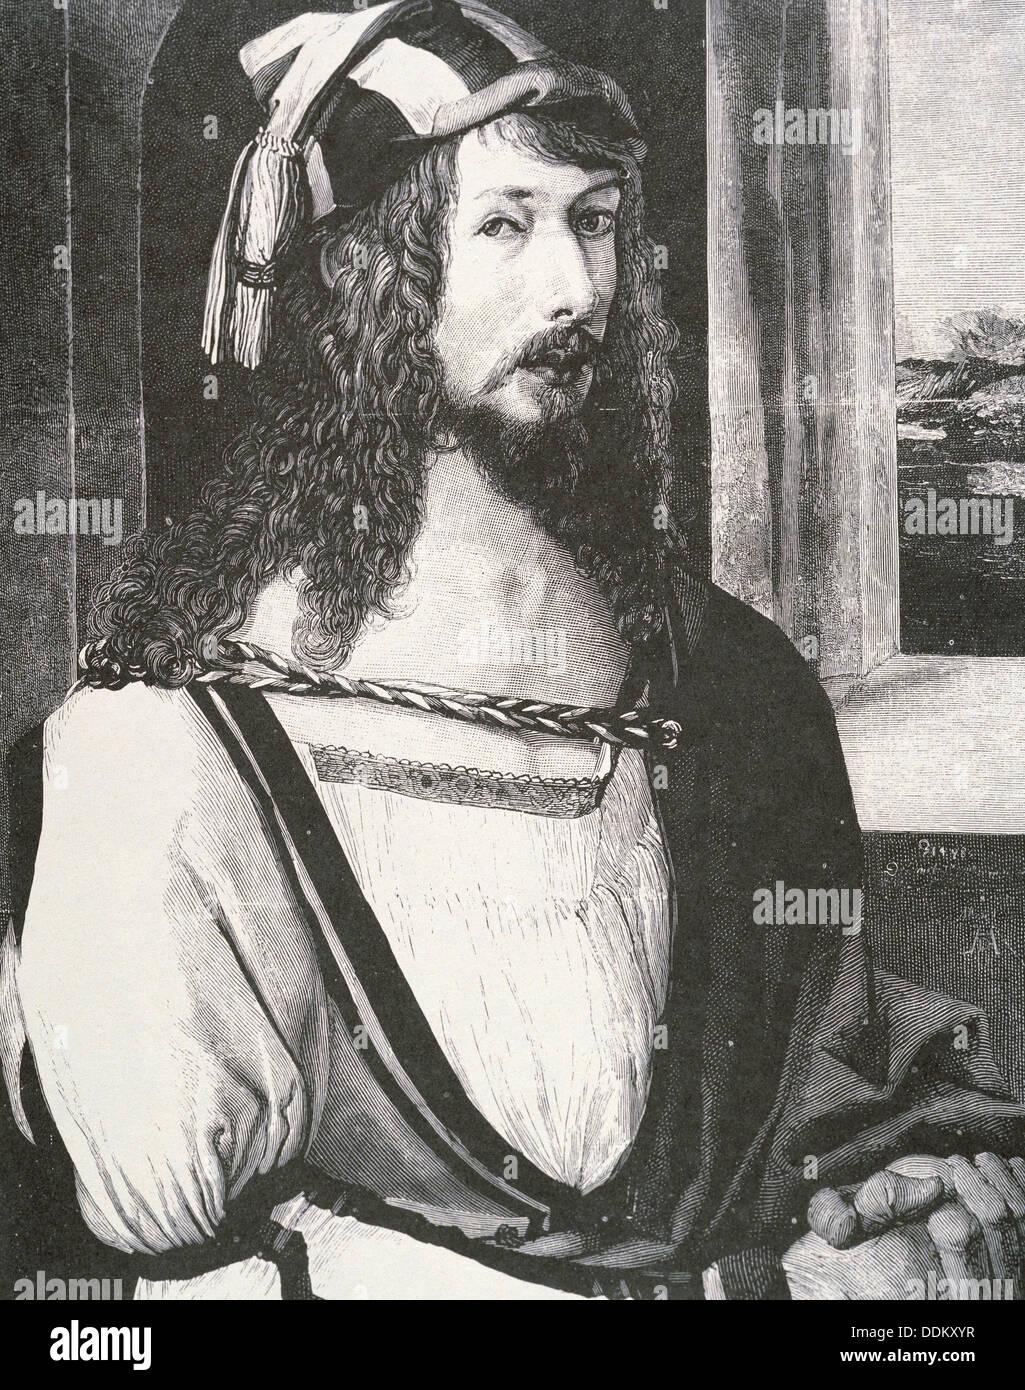 Albrecht Dürer (1471 - 1528), German painter and printmaker. Engraving from a self-portrait Stock Photo